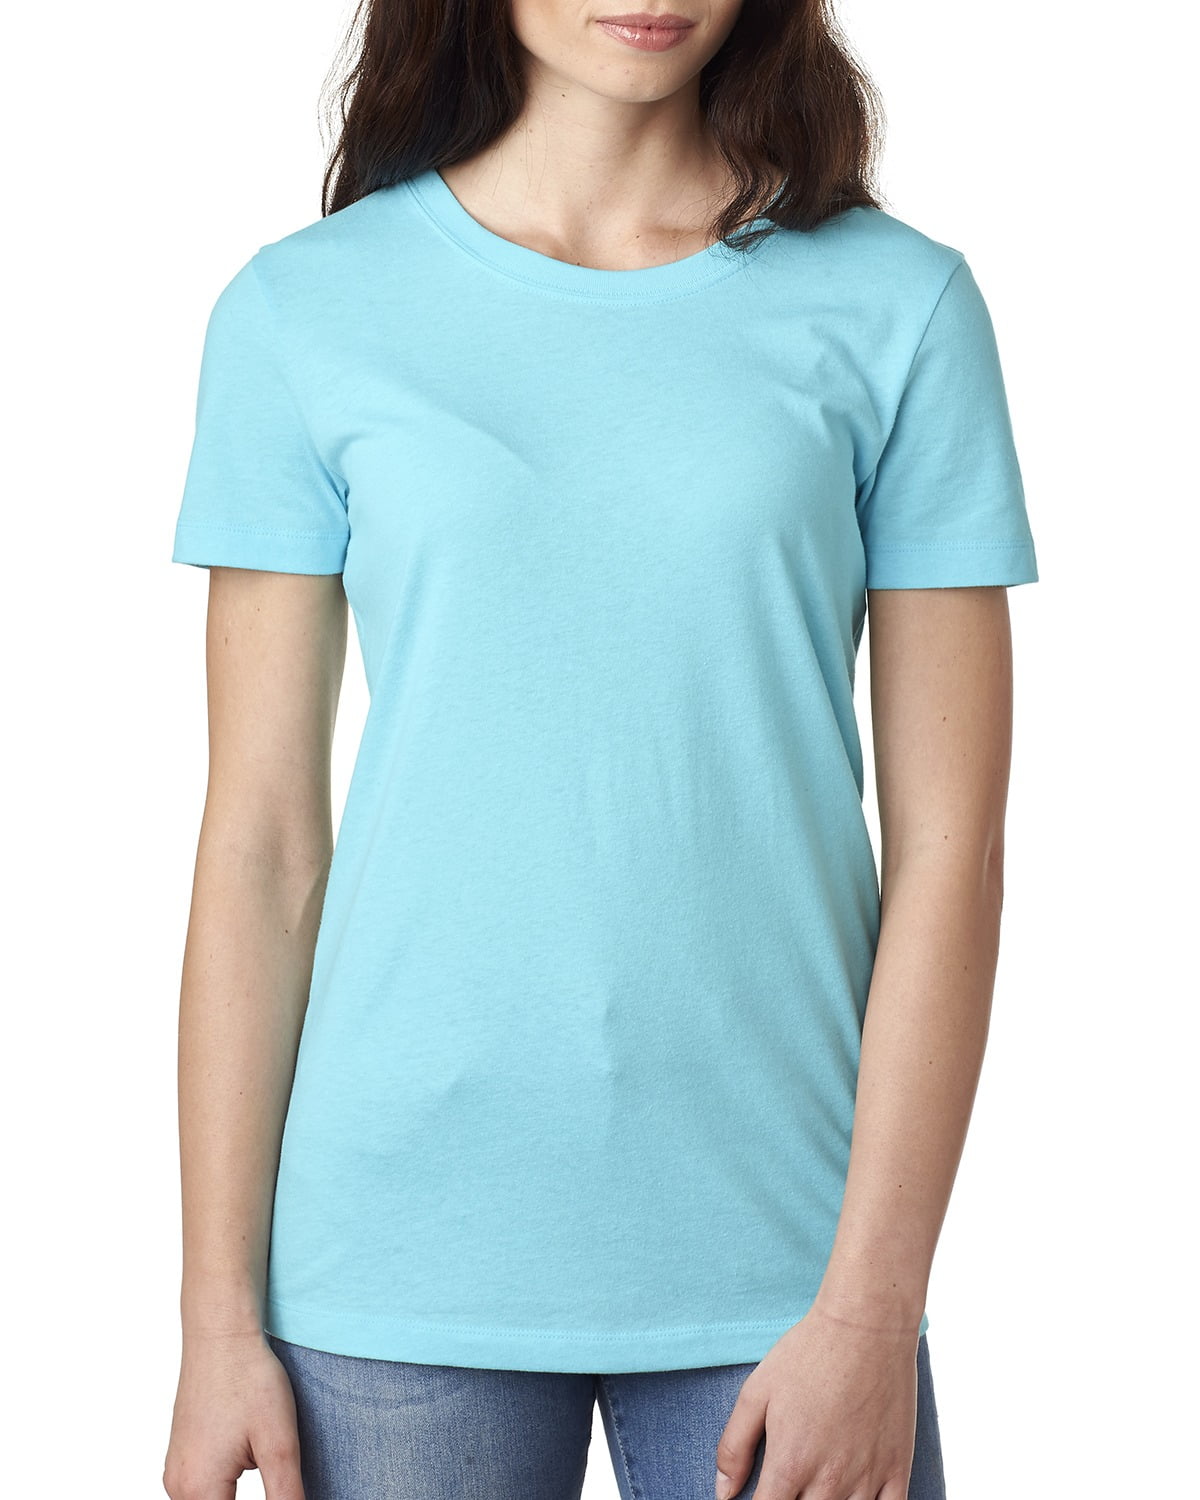 Next Level Apparel - The Next Level Ladies Ideal T-Shirt - CANCUN - L ...